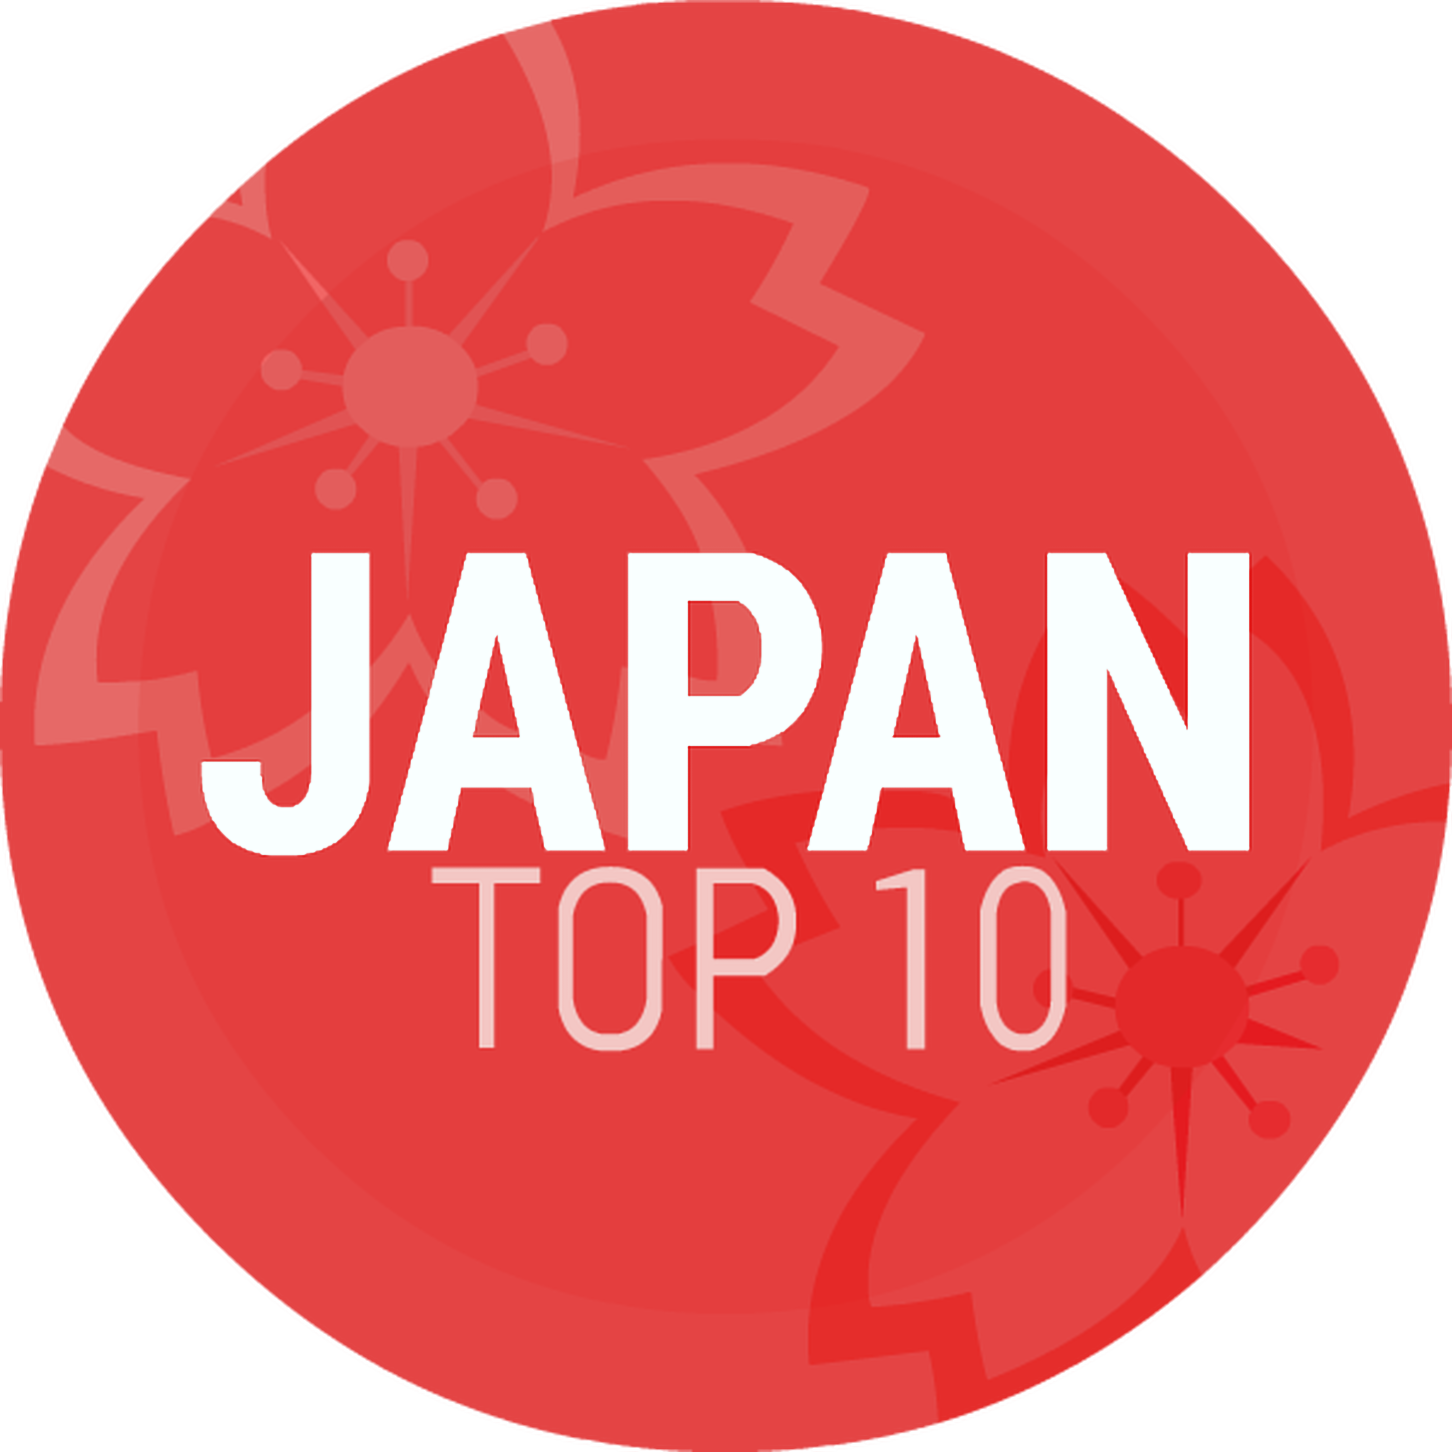 Episode 160: Japan Top 10 December Artist Of The Month: 嵐